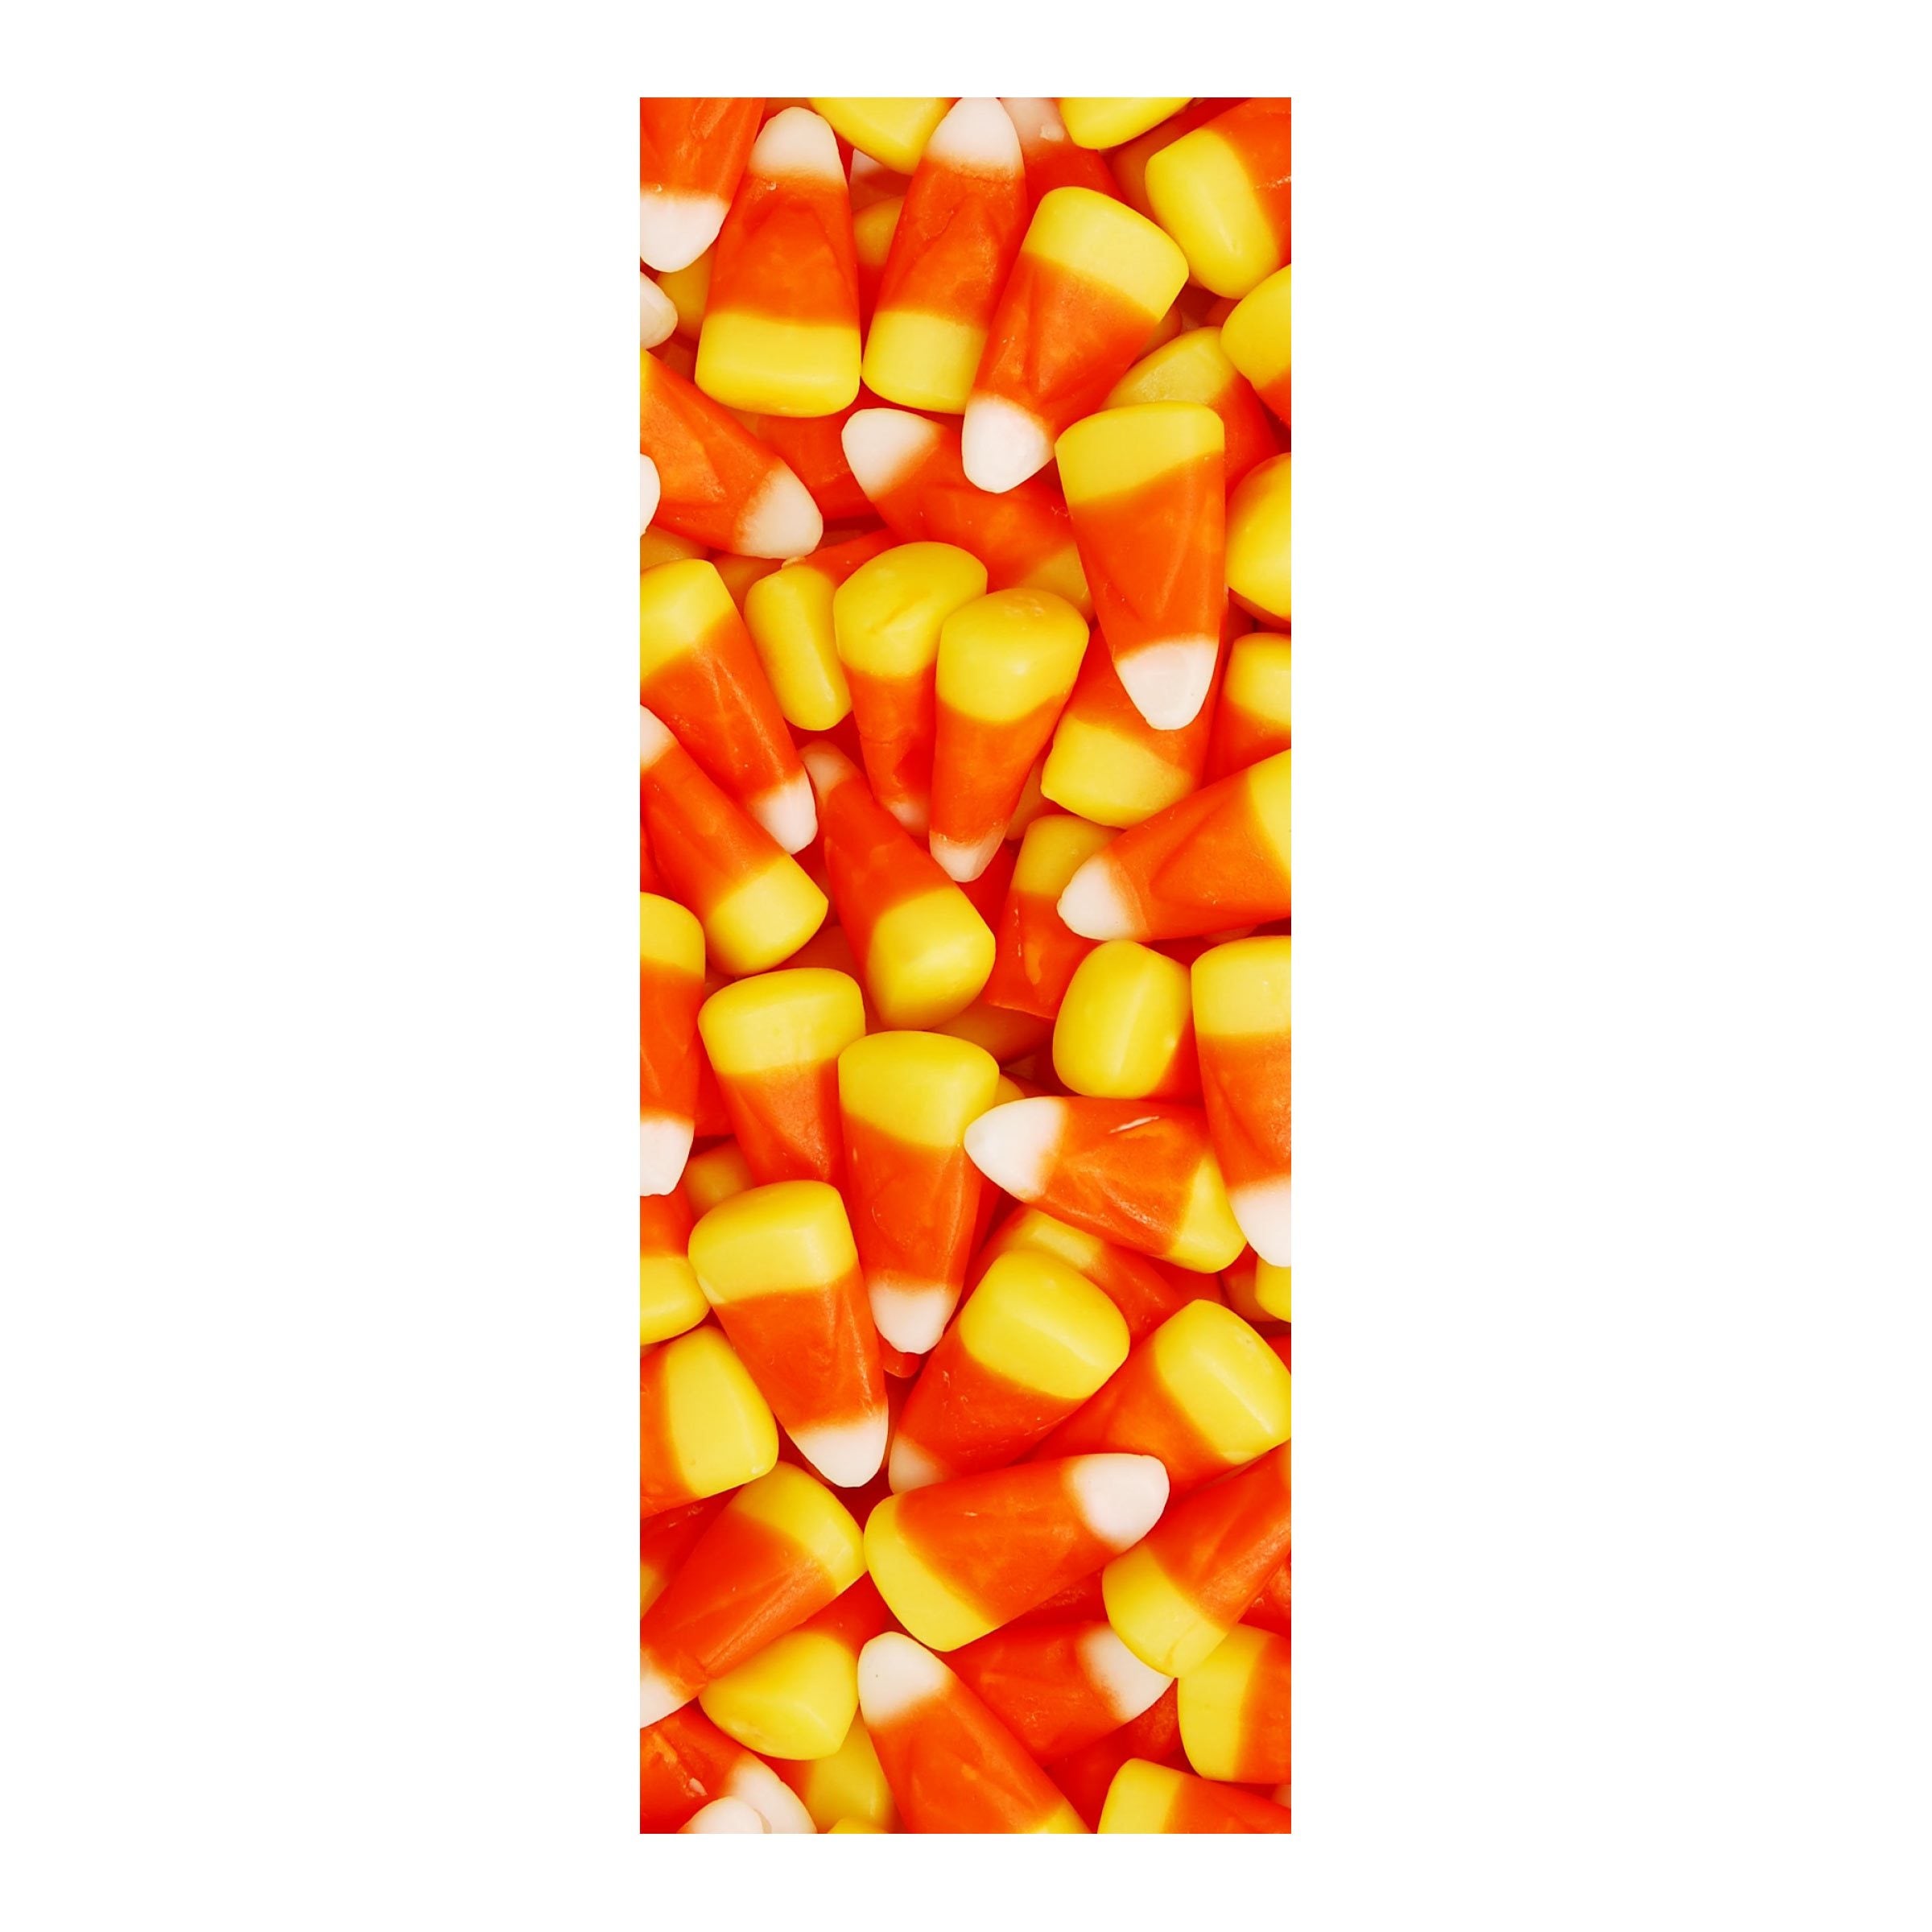 #design_candy corn